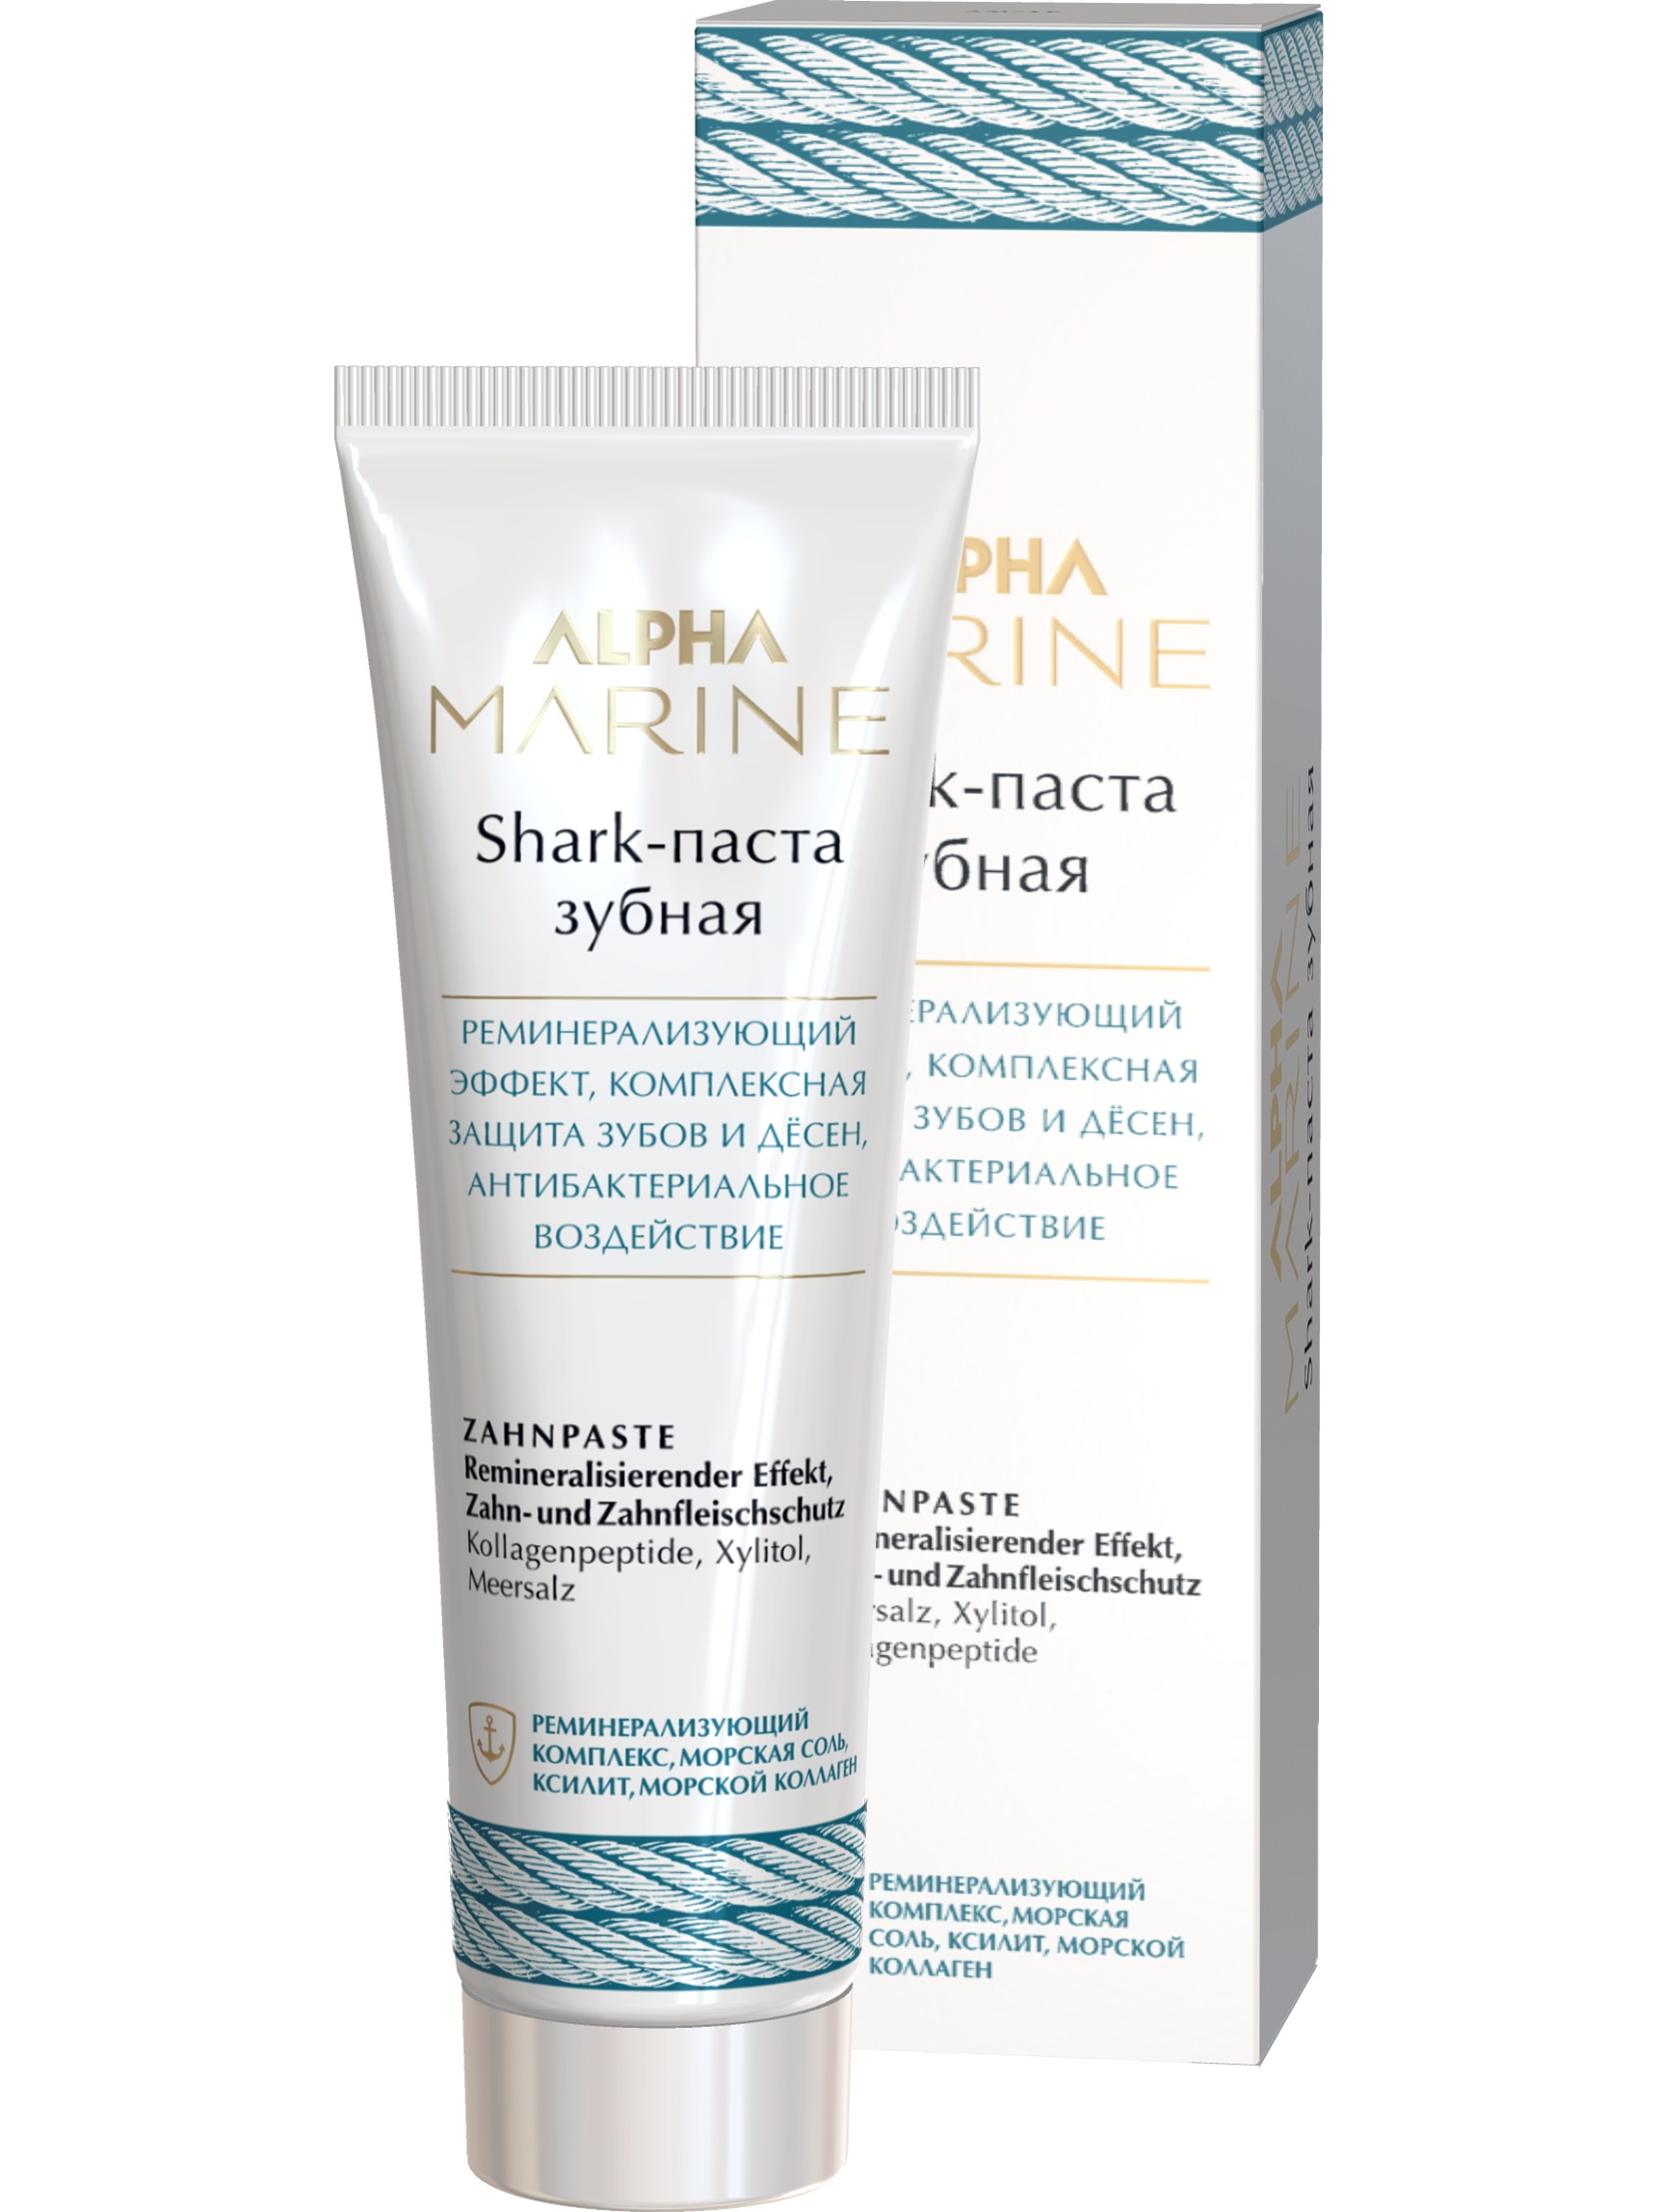 Alpha паста для волос. Shark-паста зубная Alpha Marine. Salt-паста для волос с матовым эффектом Alpha Marine, 100 мл.